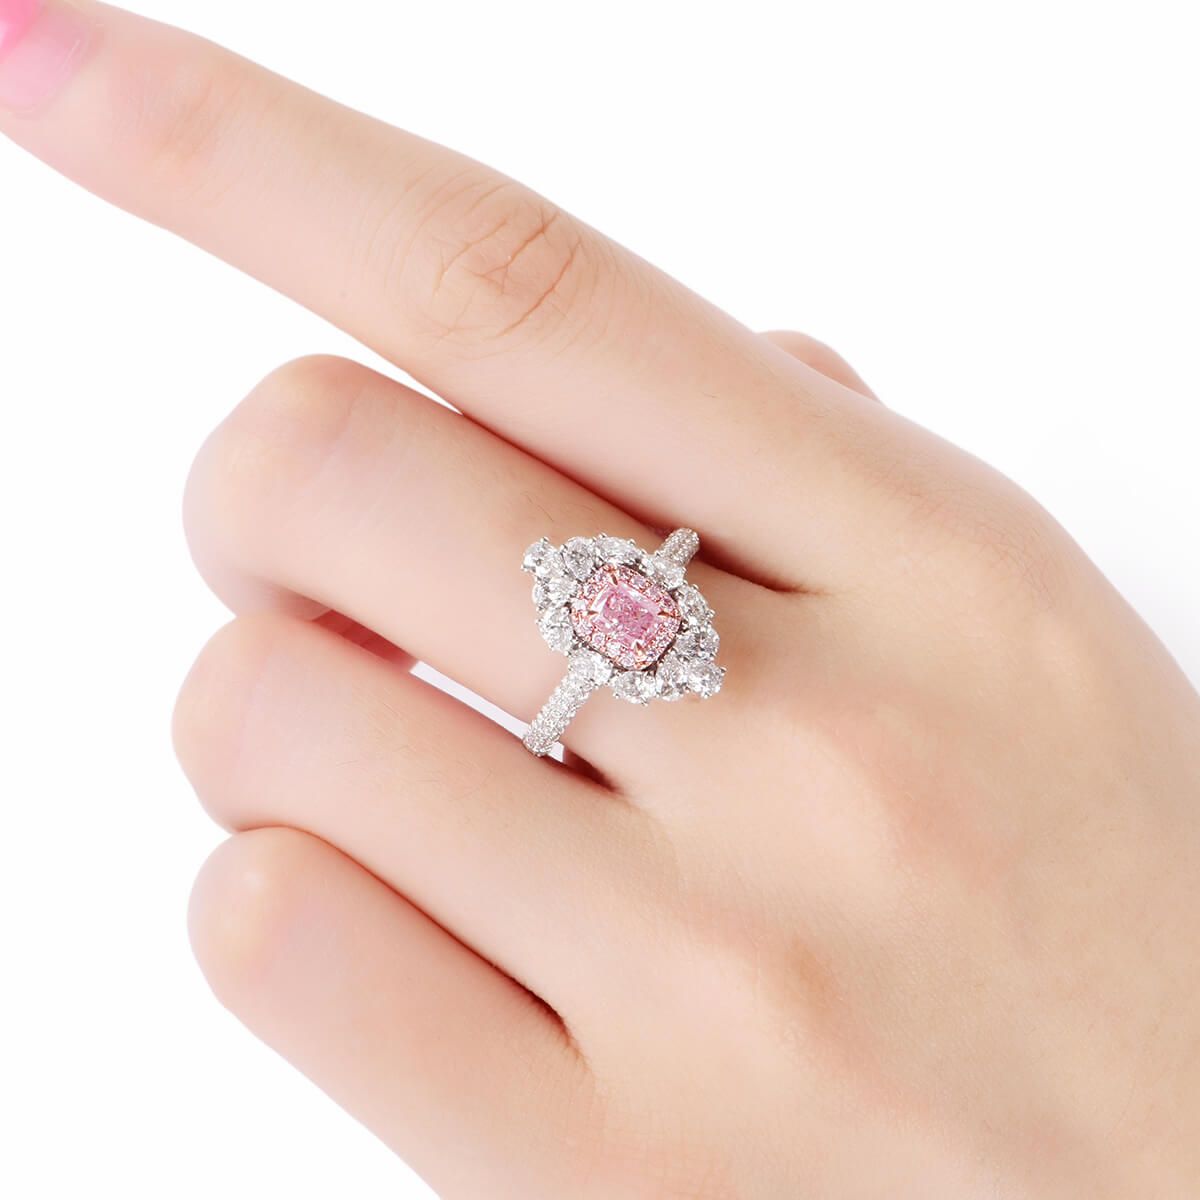 Very Light Pink Diamond Ring, 0.43 Ct. (1.81 Ct. TW), Cushion shape, GIA Certified, 2195307838